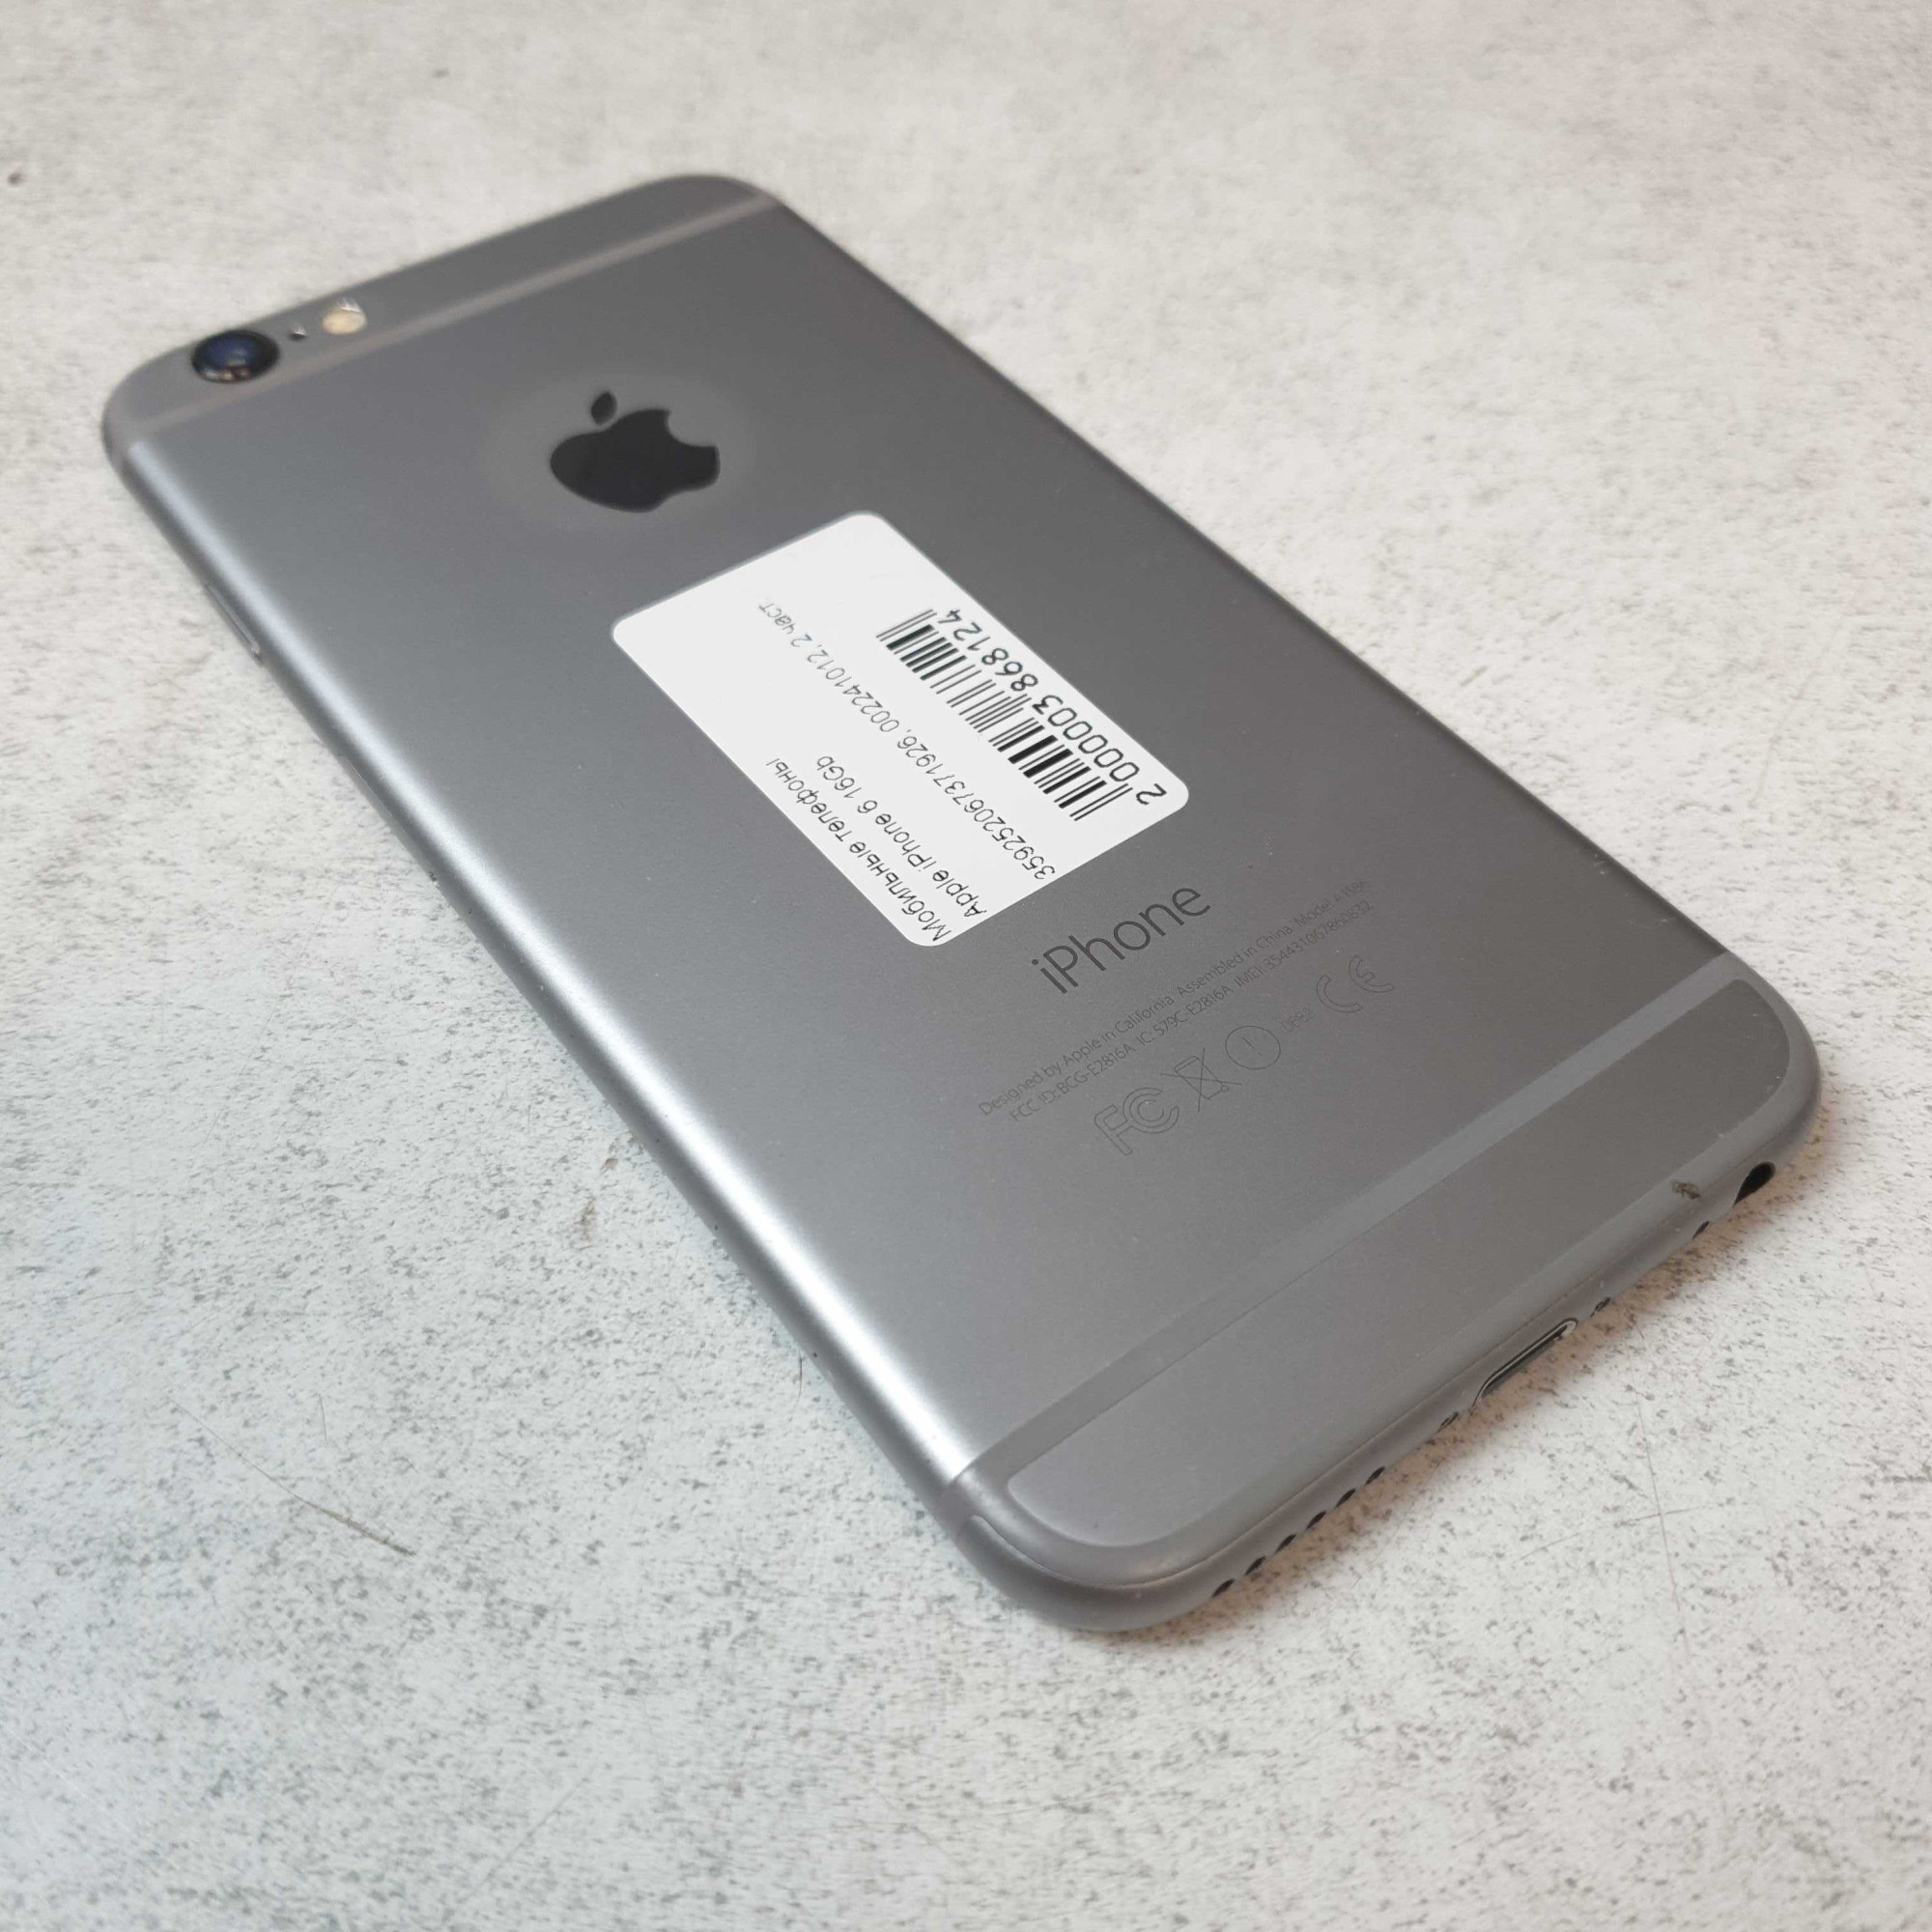 Apple iPhone 6 16Gb Space Gray  6